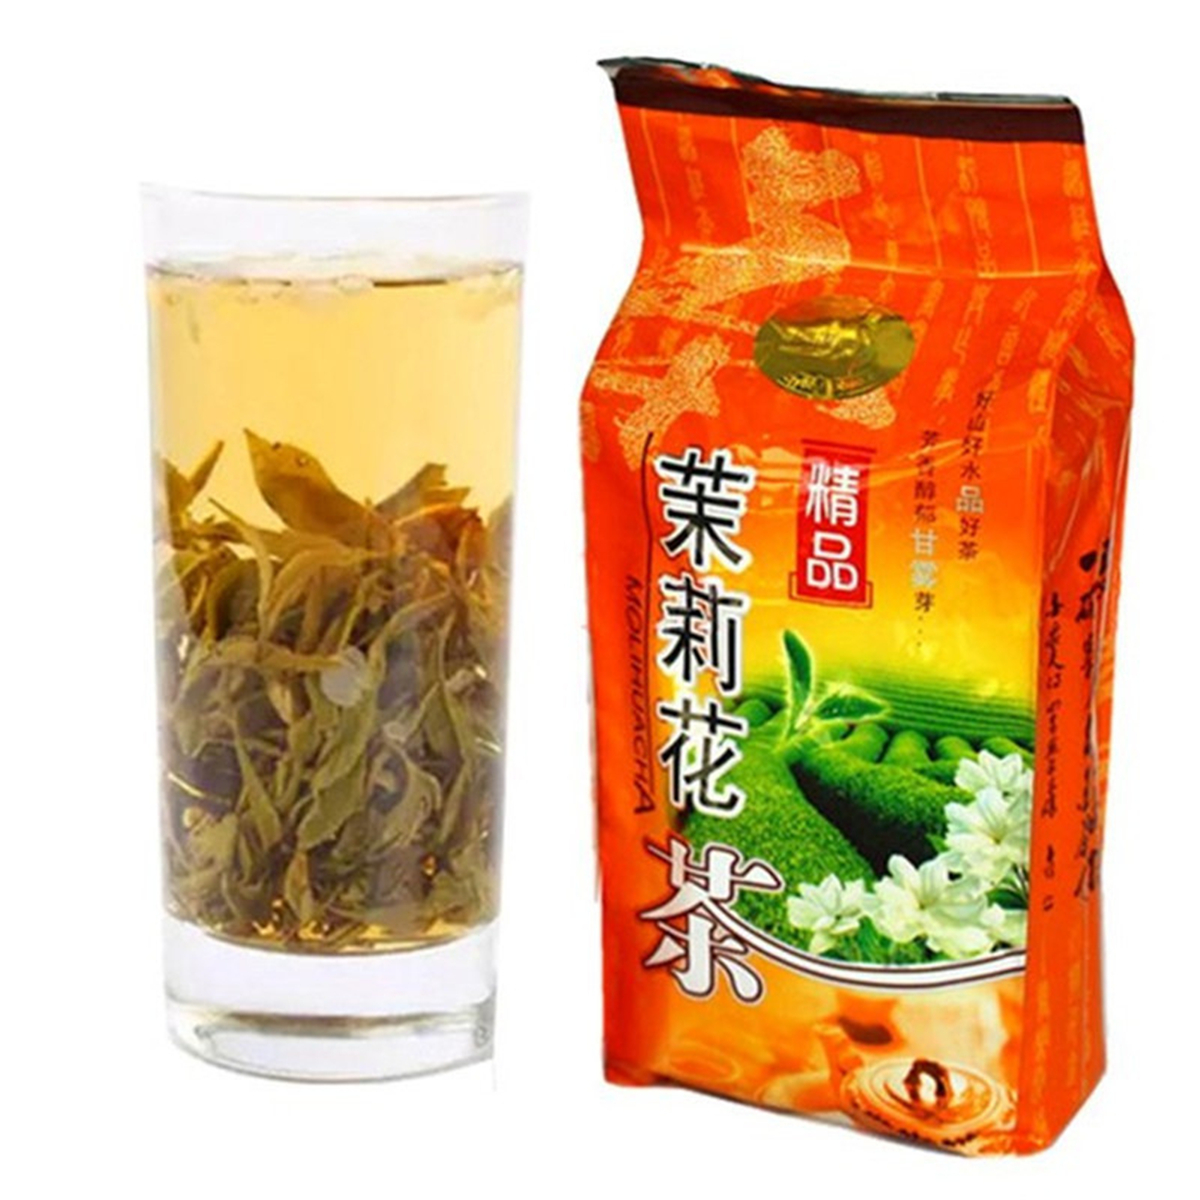 Chinese Spring Organic Jasmine Green Tea 250g Freshest Organic Green...